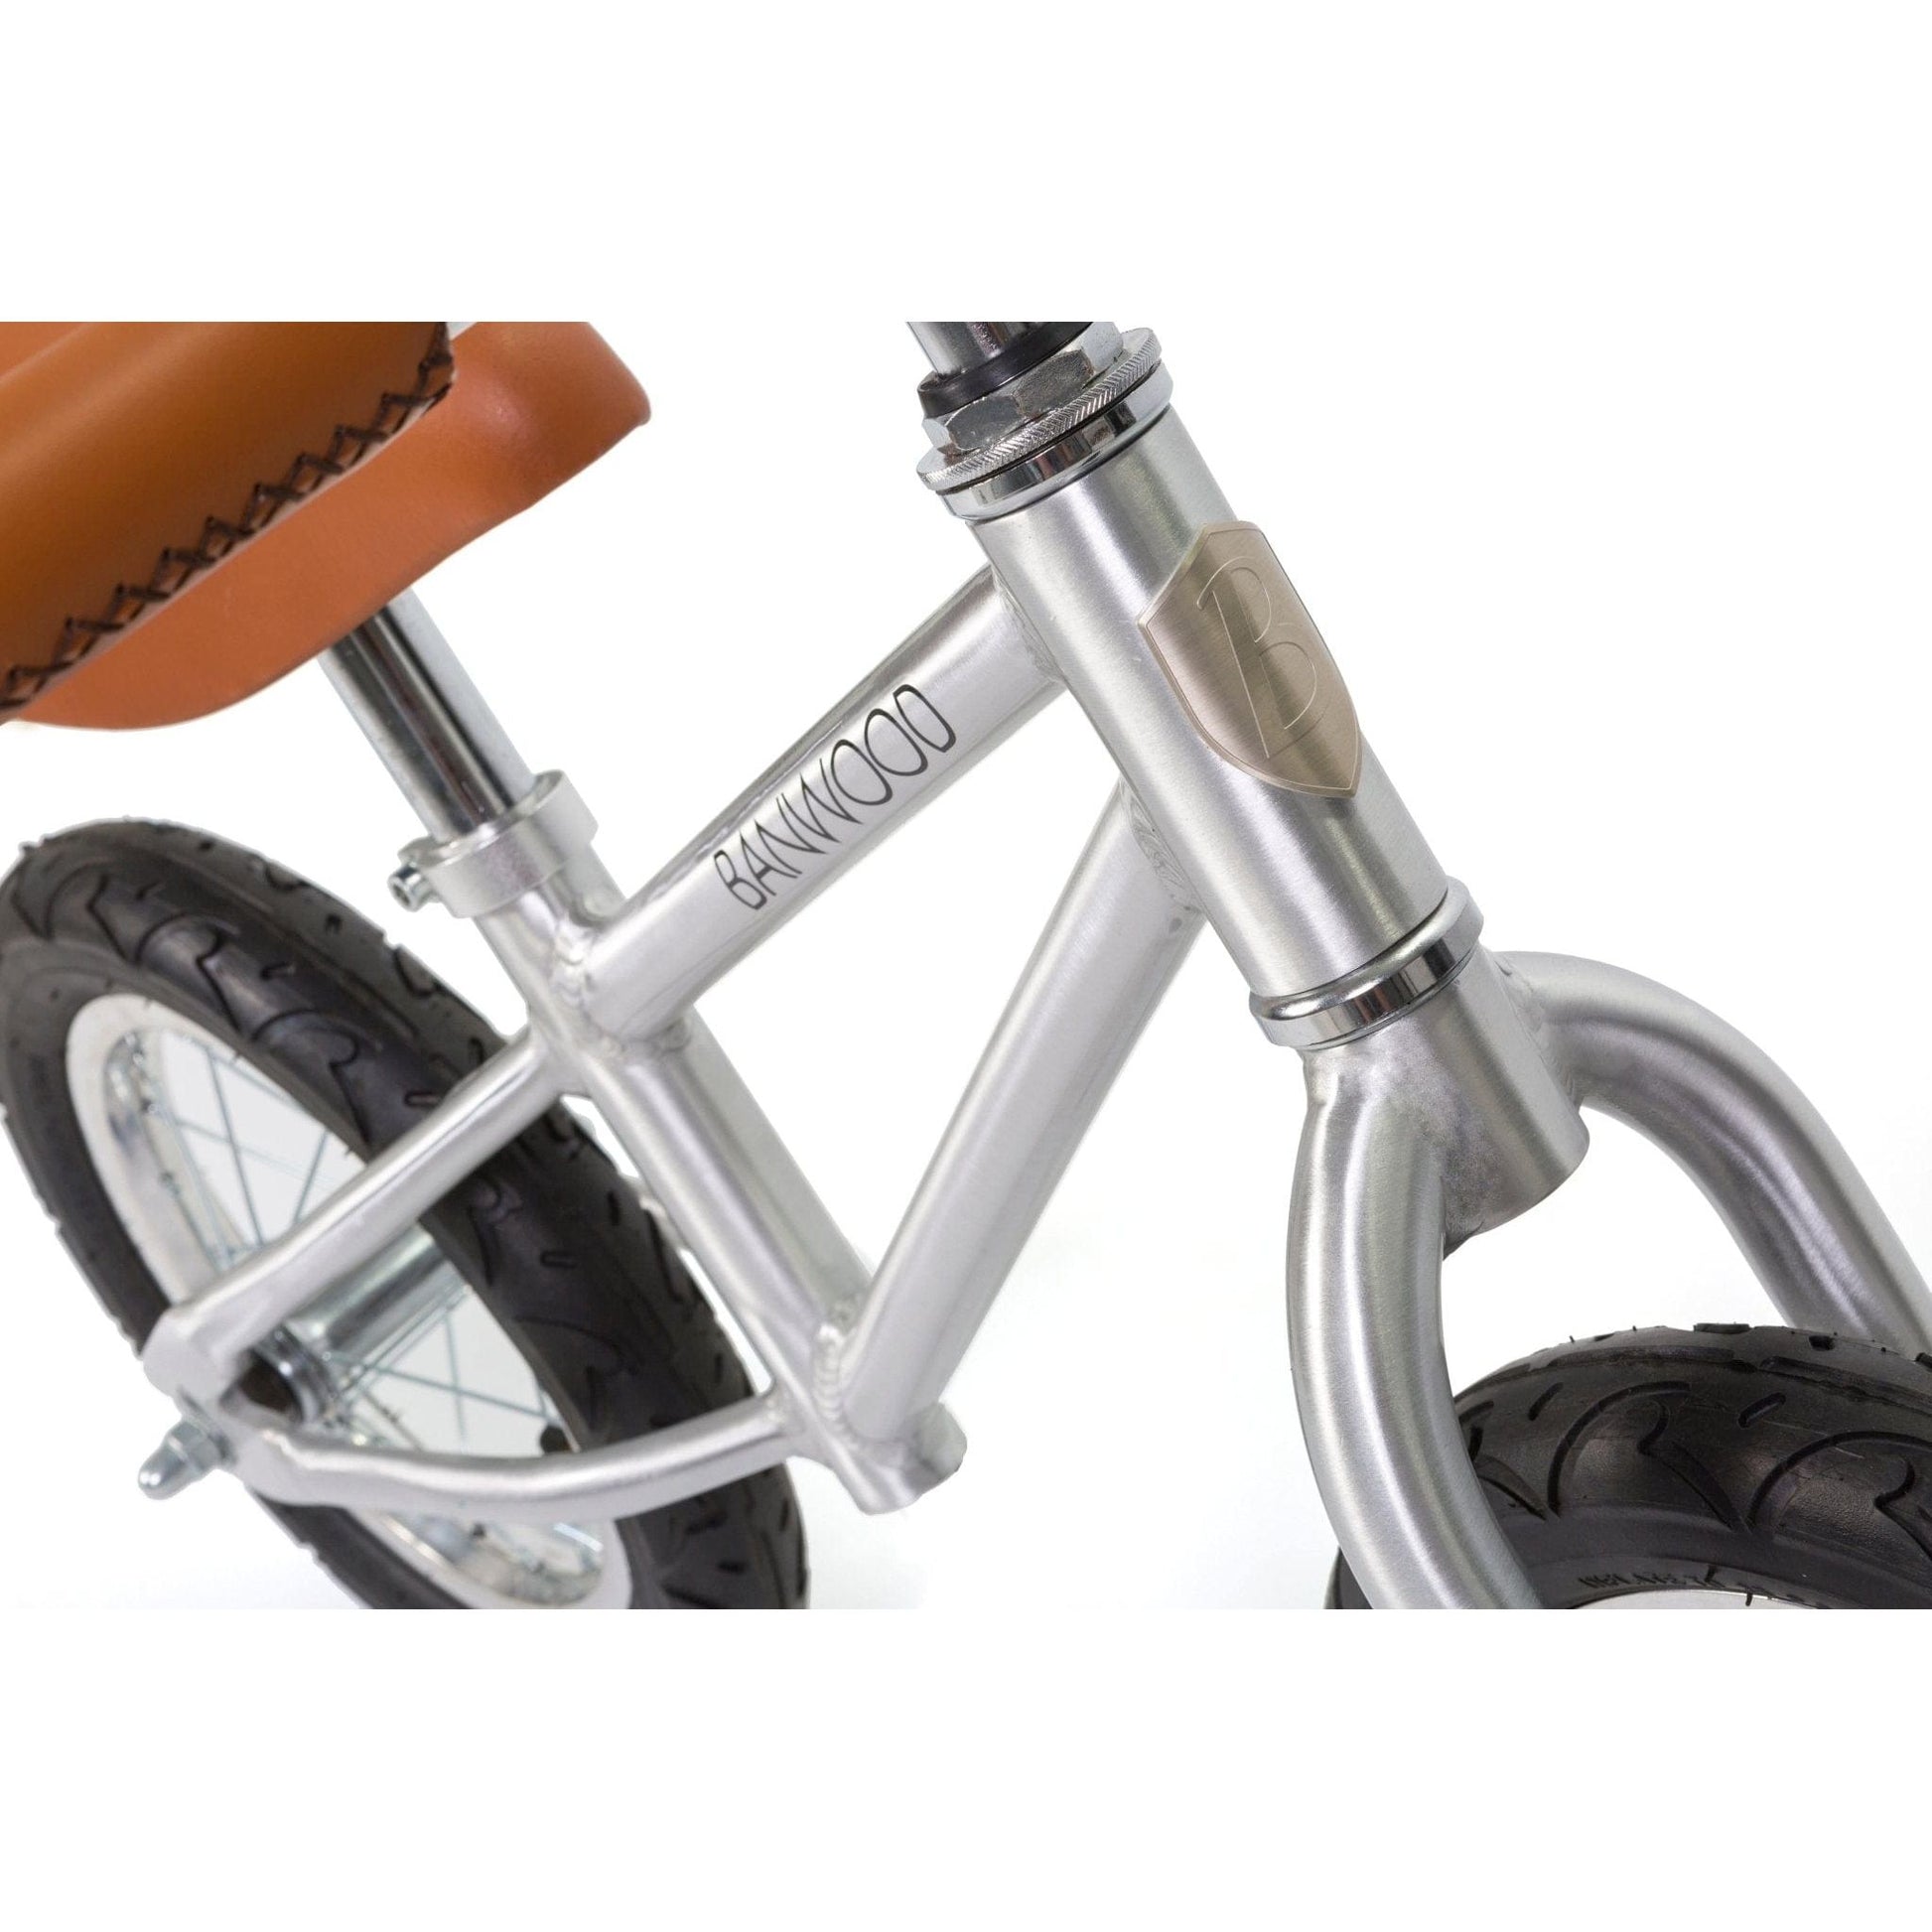 Banwood First Go Balance Bike - Age 3-5 - Chrome - The Online Toy Shop6